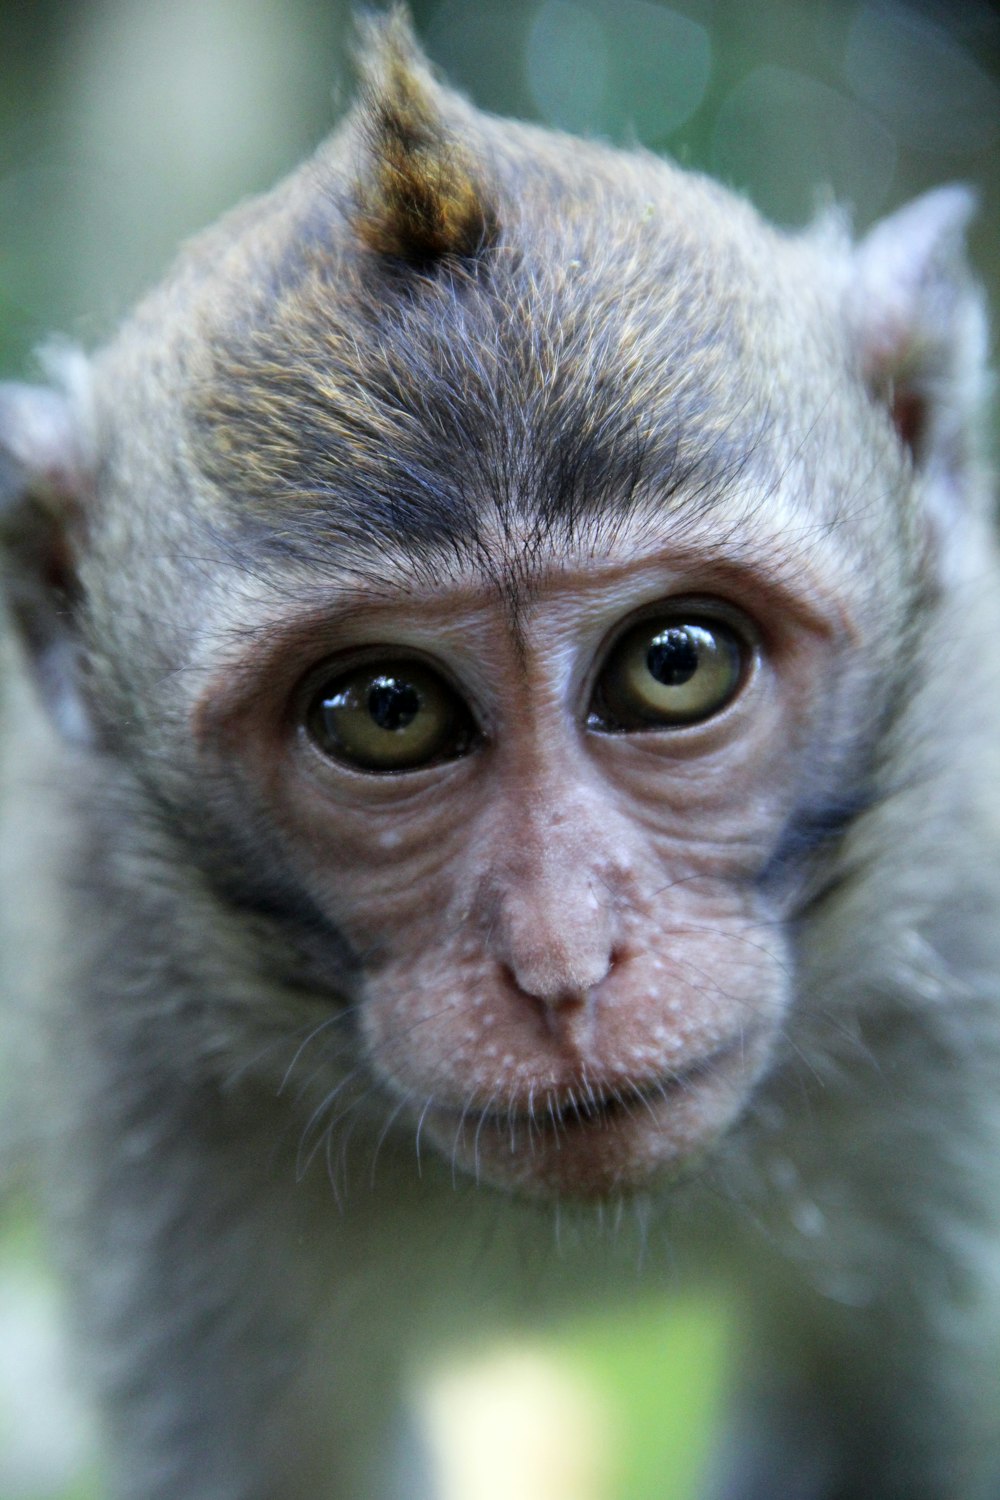 close up photo of monkeys face